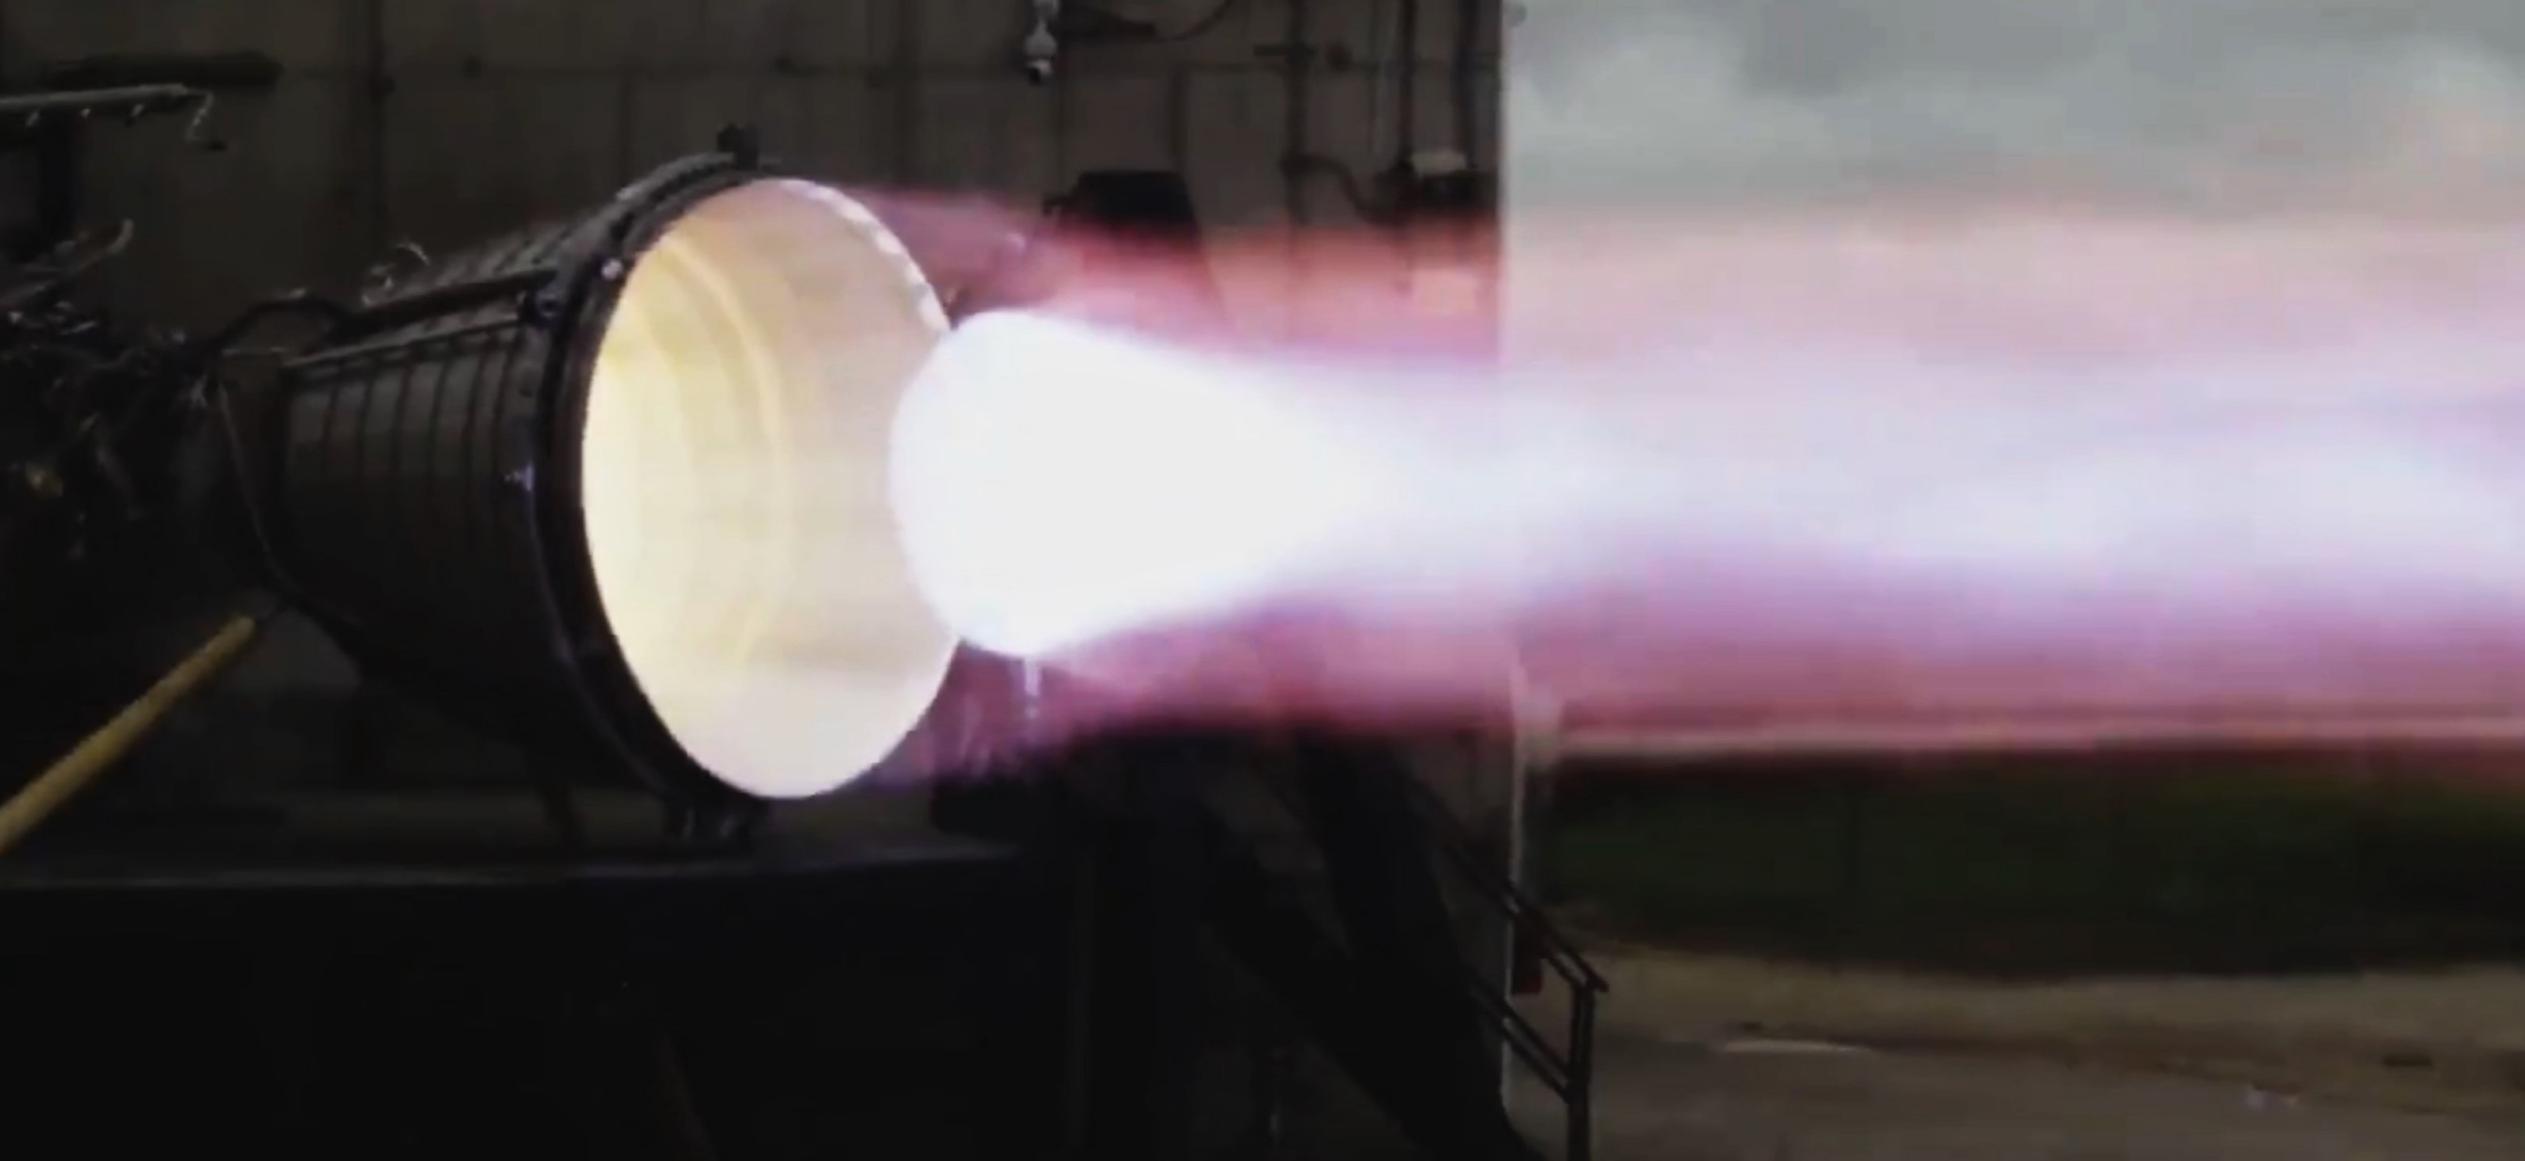 Raptor Vacuum SN0x static fire 092420 (SpaceX) 5 crop (c)